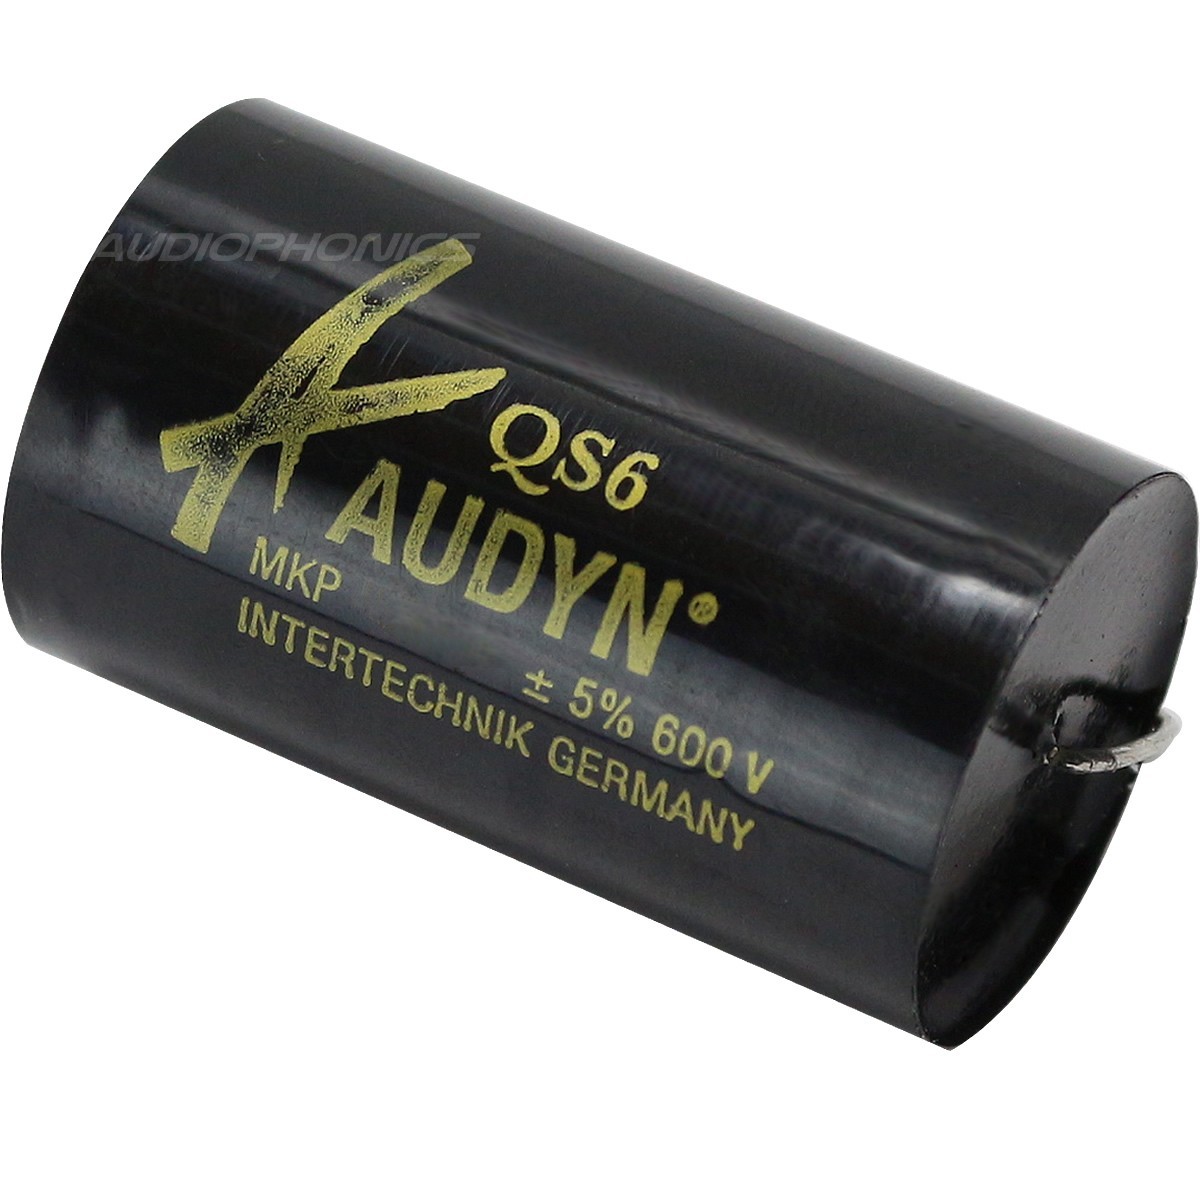 AUDYN CAP QS6 Condensateur MKP 600V 0.56µF